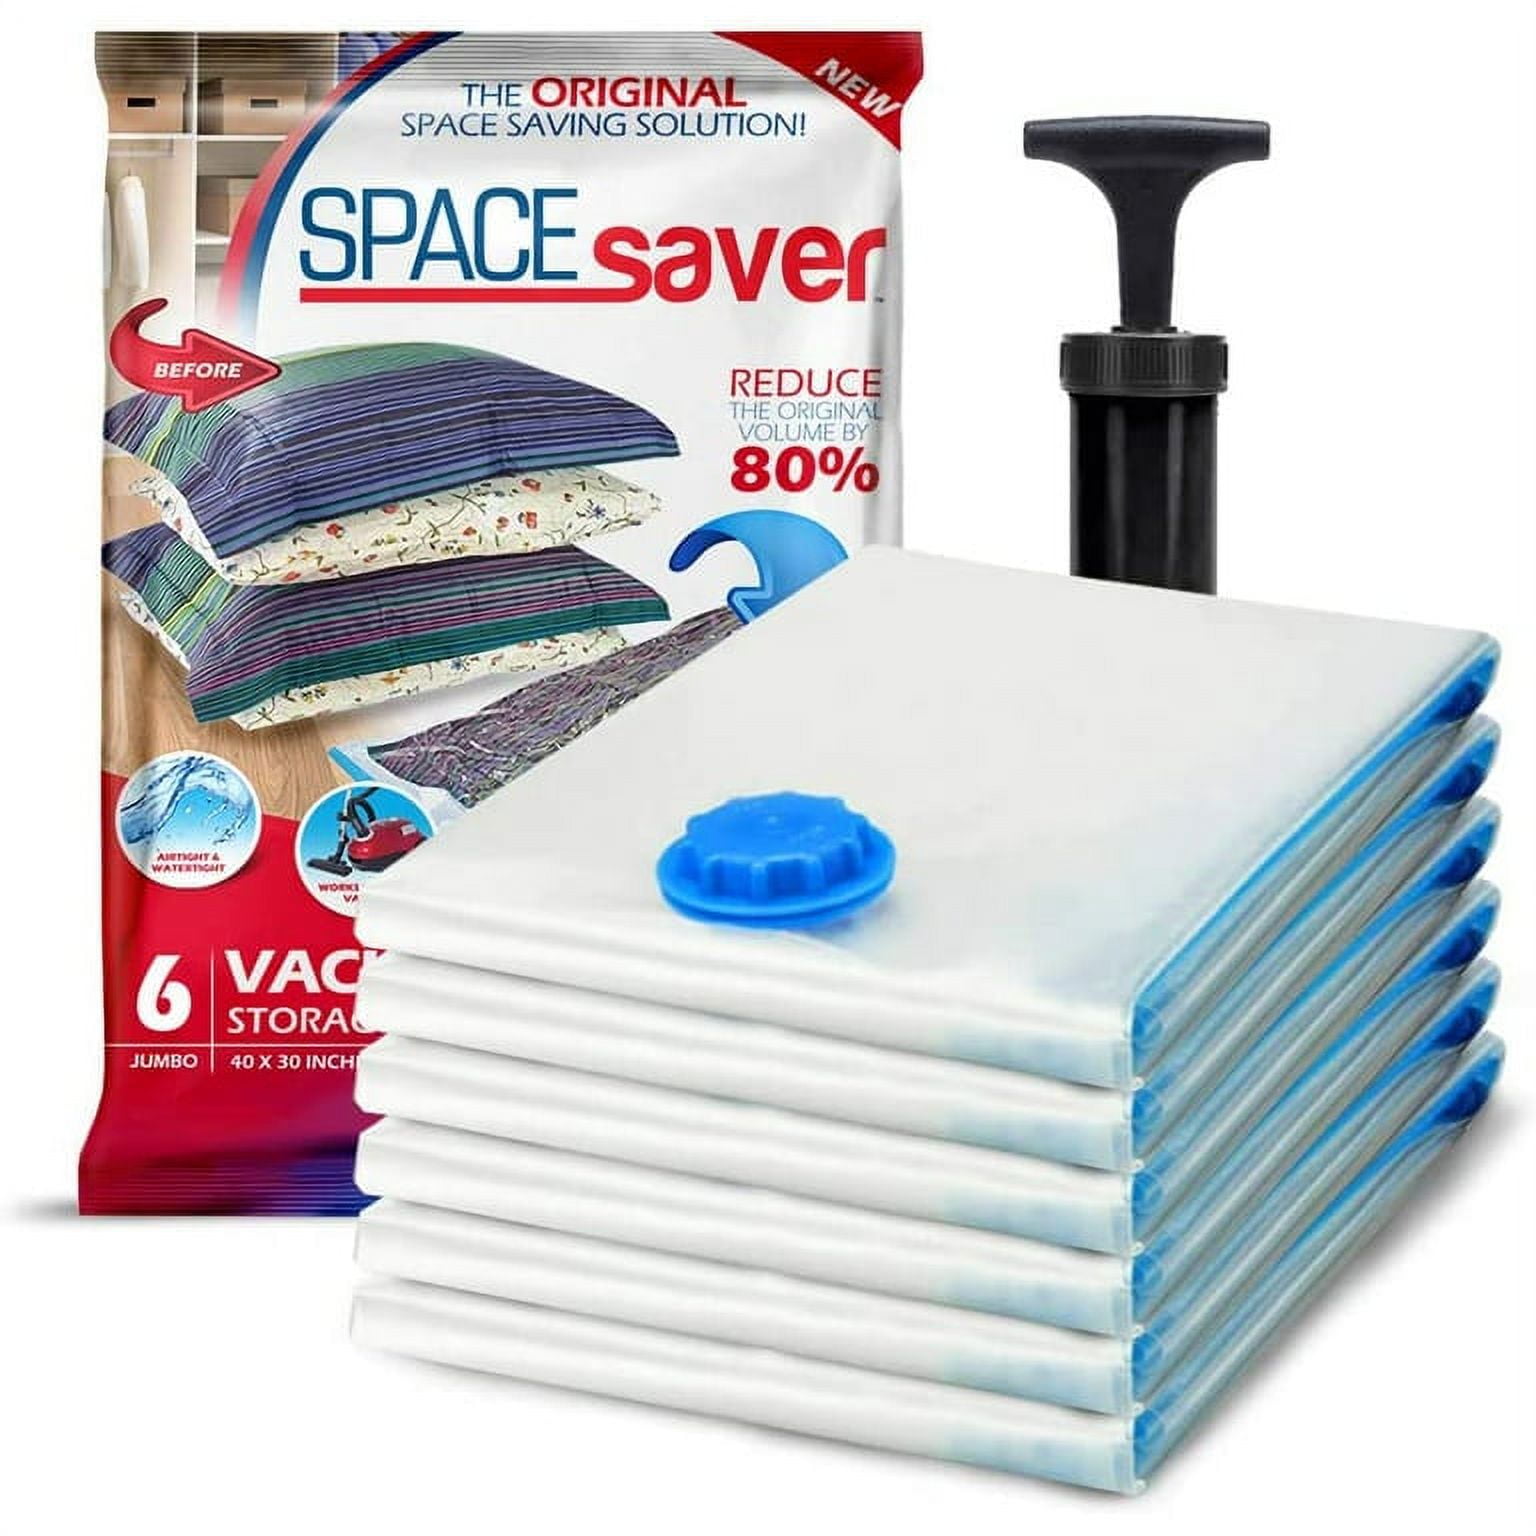 Do Vacuum Seal Bags really work? (Dr Save Vacuum Bag Review!) 